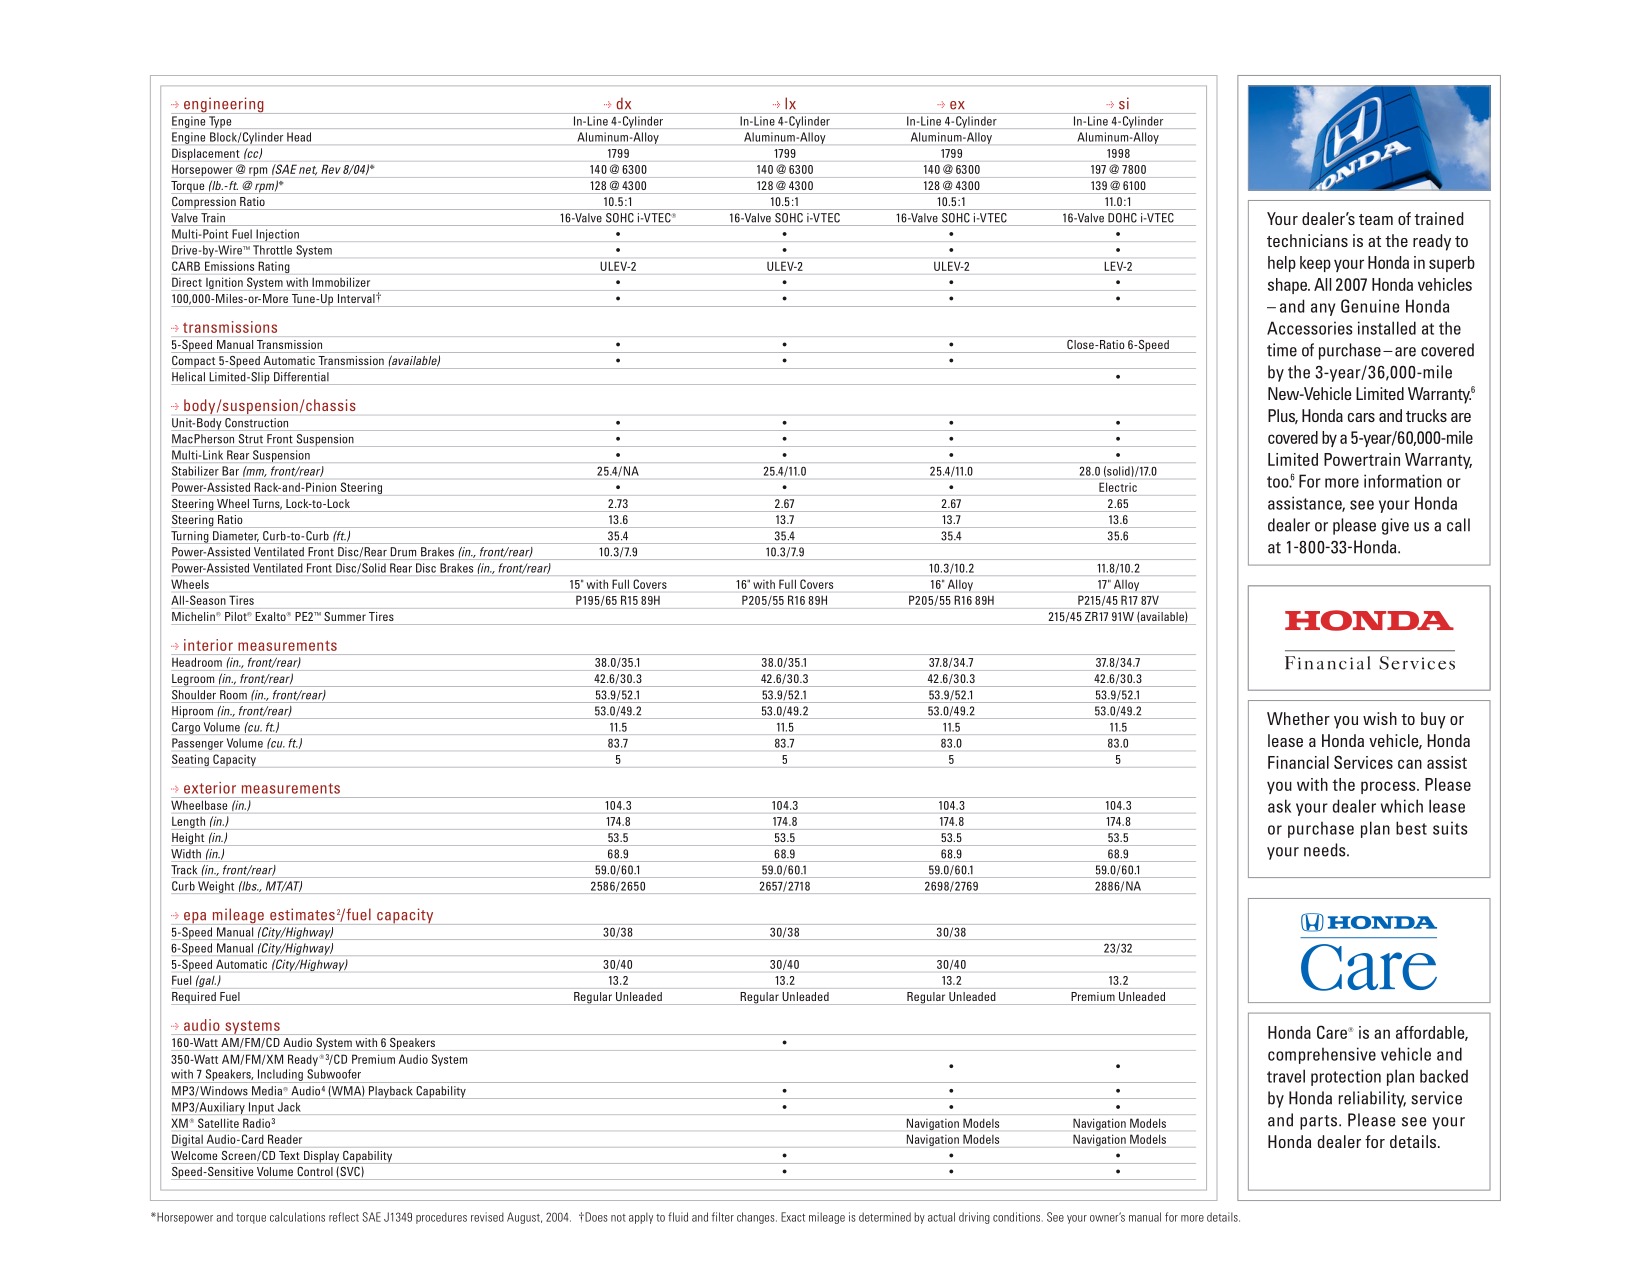 2007 Honda Civic Coupe Brochure Page 11